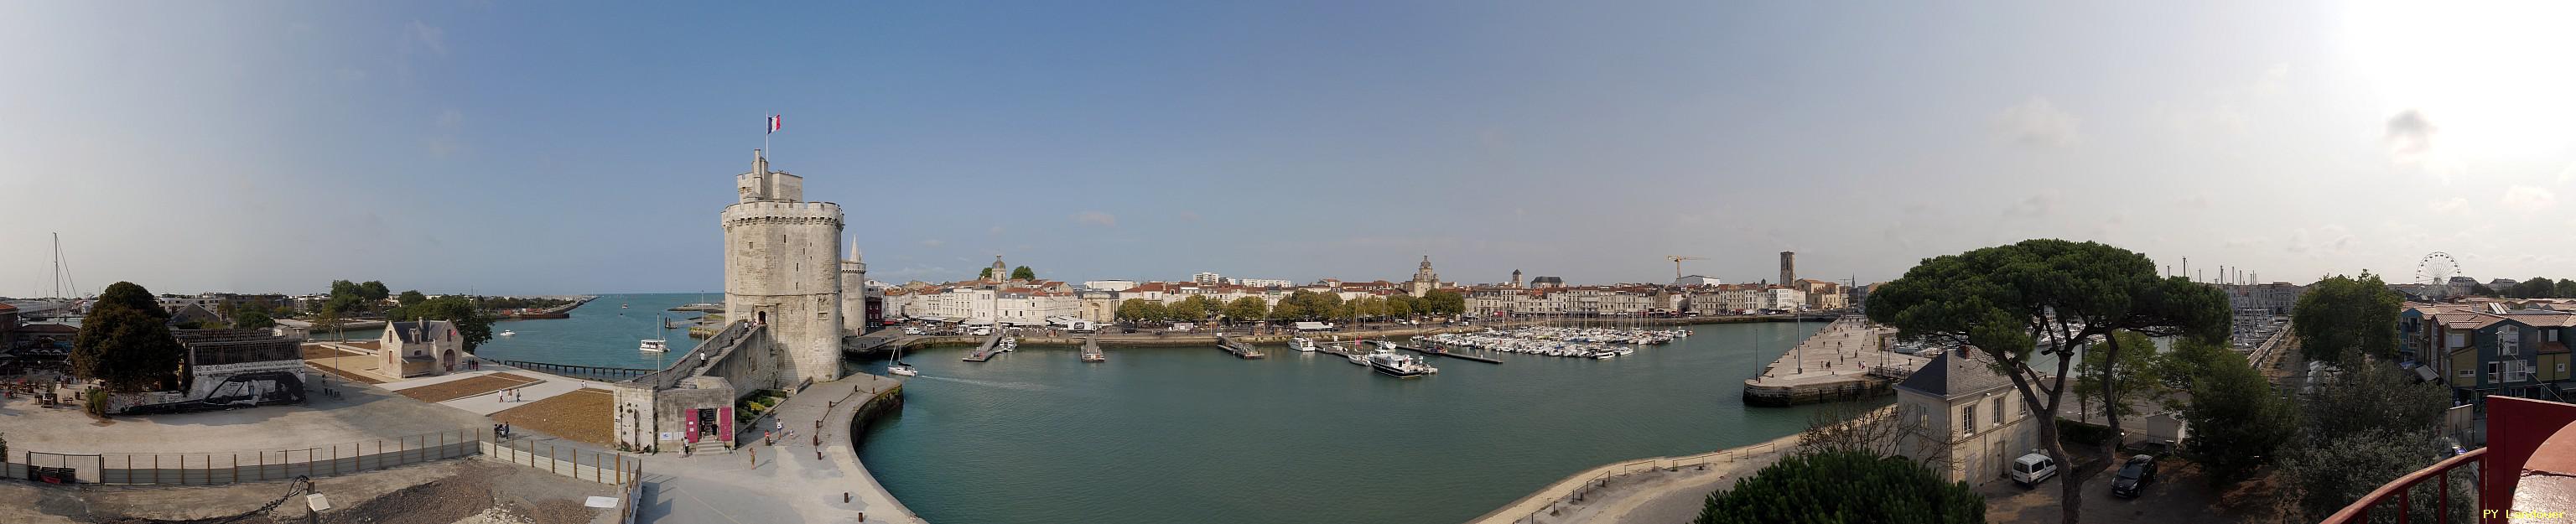 La Rochelle vu d'en haut, Phare Gabut